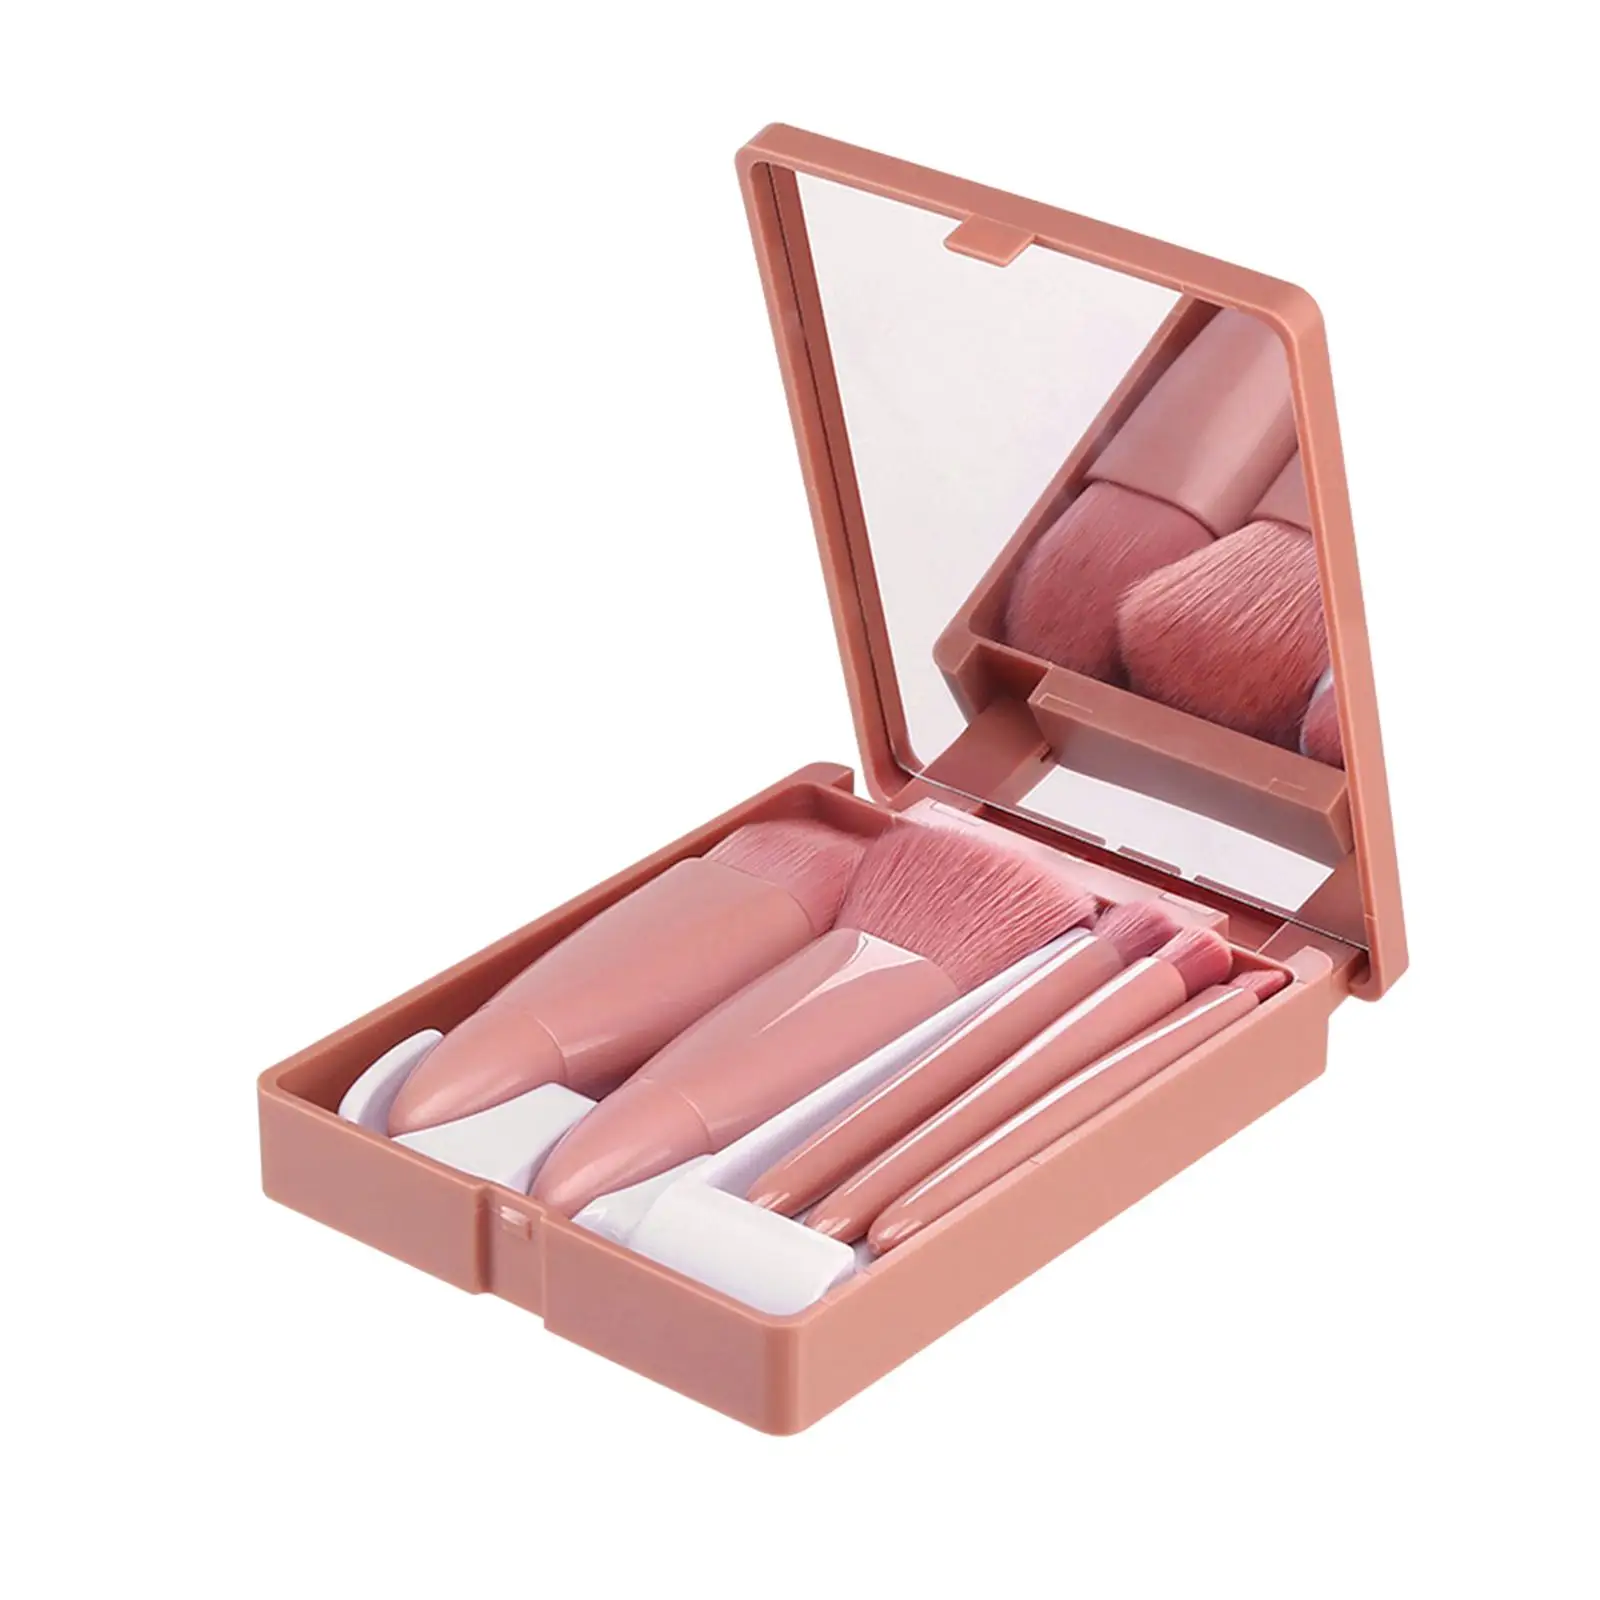 Makeup Brushes Set with Case Portable Concealer Foundation Girls